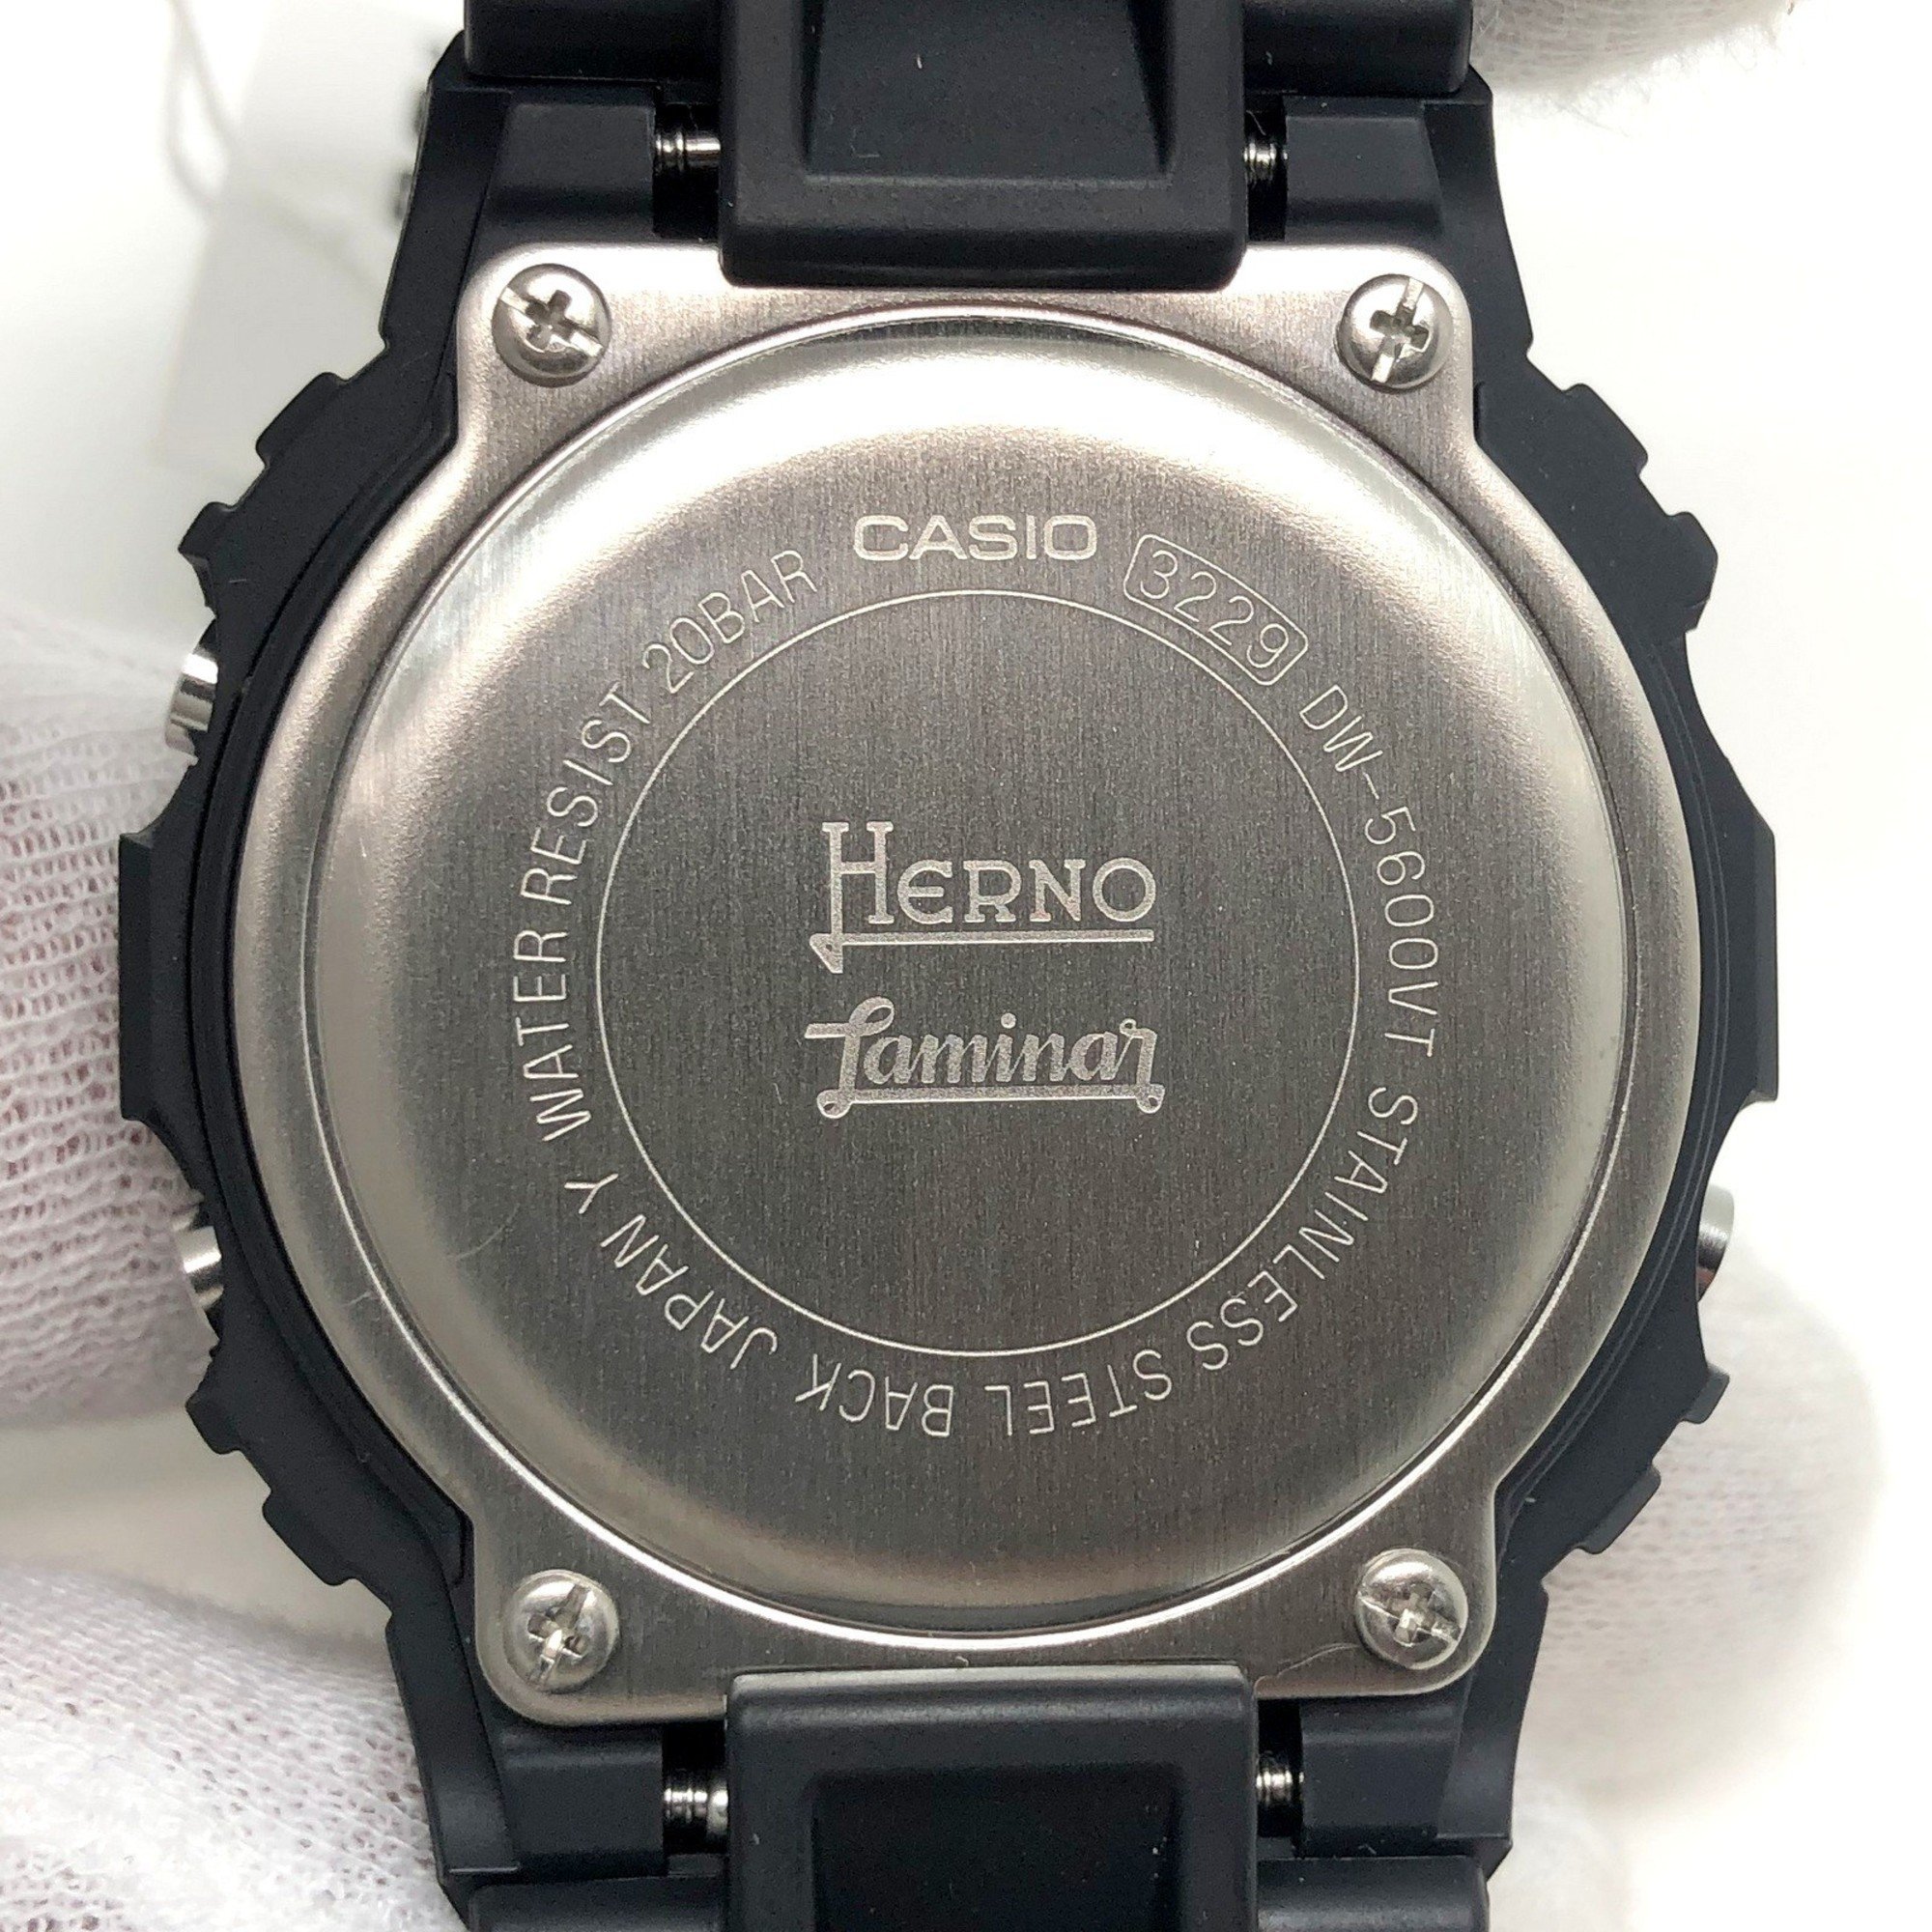 G-SHOCK CASIO Watch DW-5600 HERNO Laminar Collaboration Aoyama Store 10th Anniversary Limited Edition Digital Quartz Black Mikunigaoka ITQQ0O22KOOW